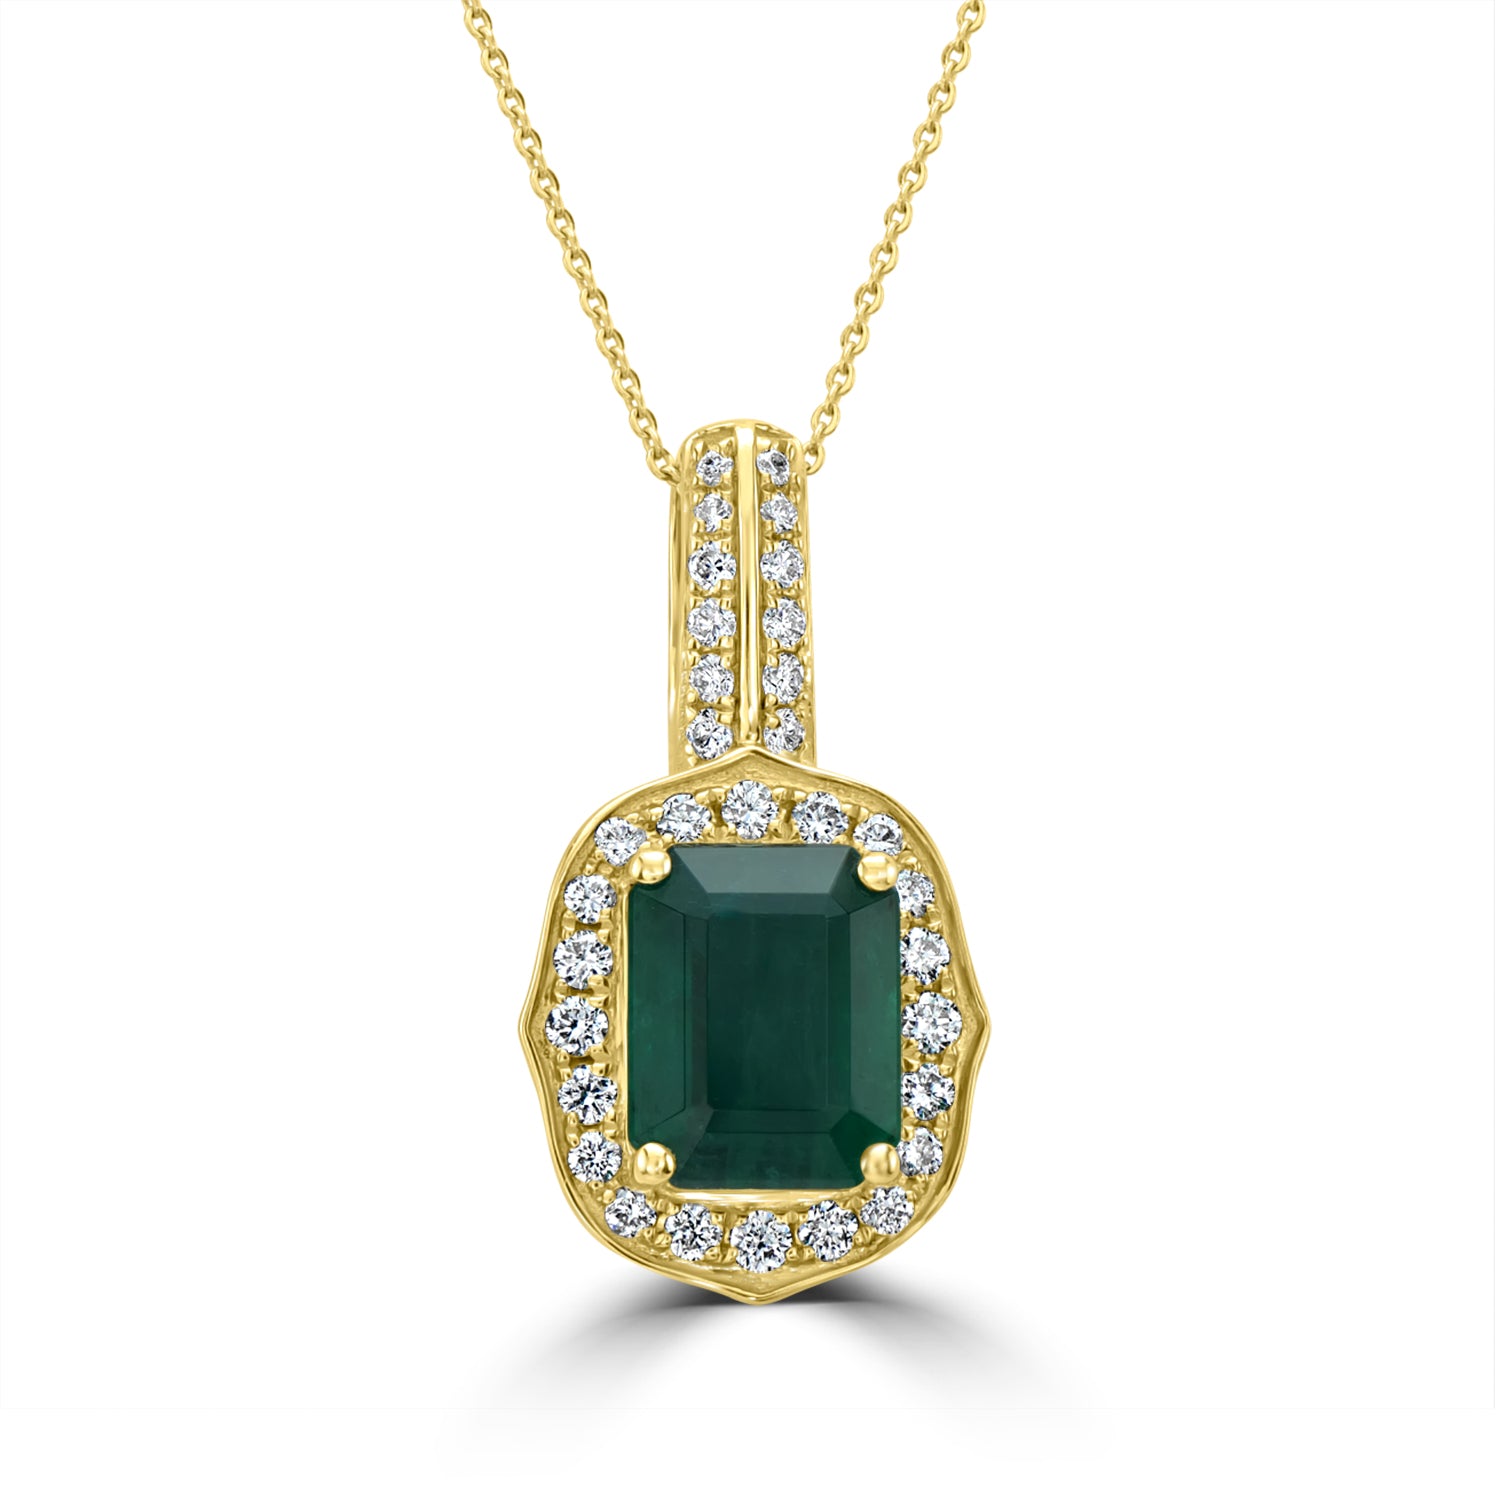 2.55ct Emerald Pendant with 0.37tct Diamonds set in 14K Yellow